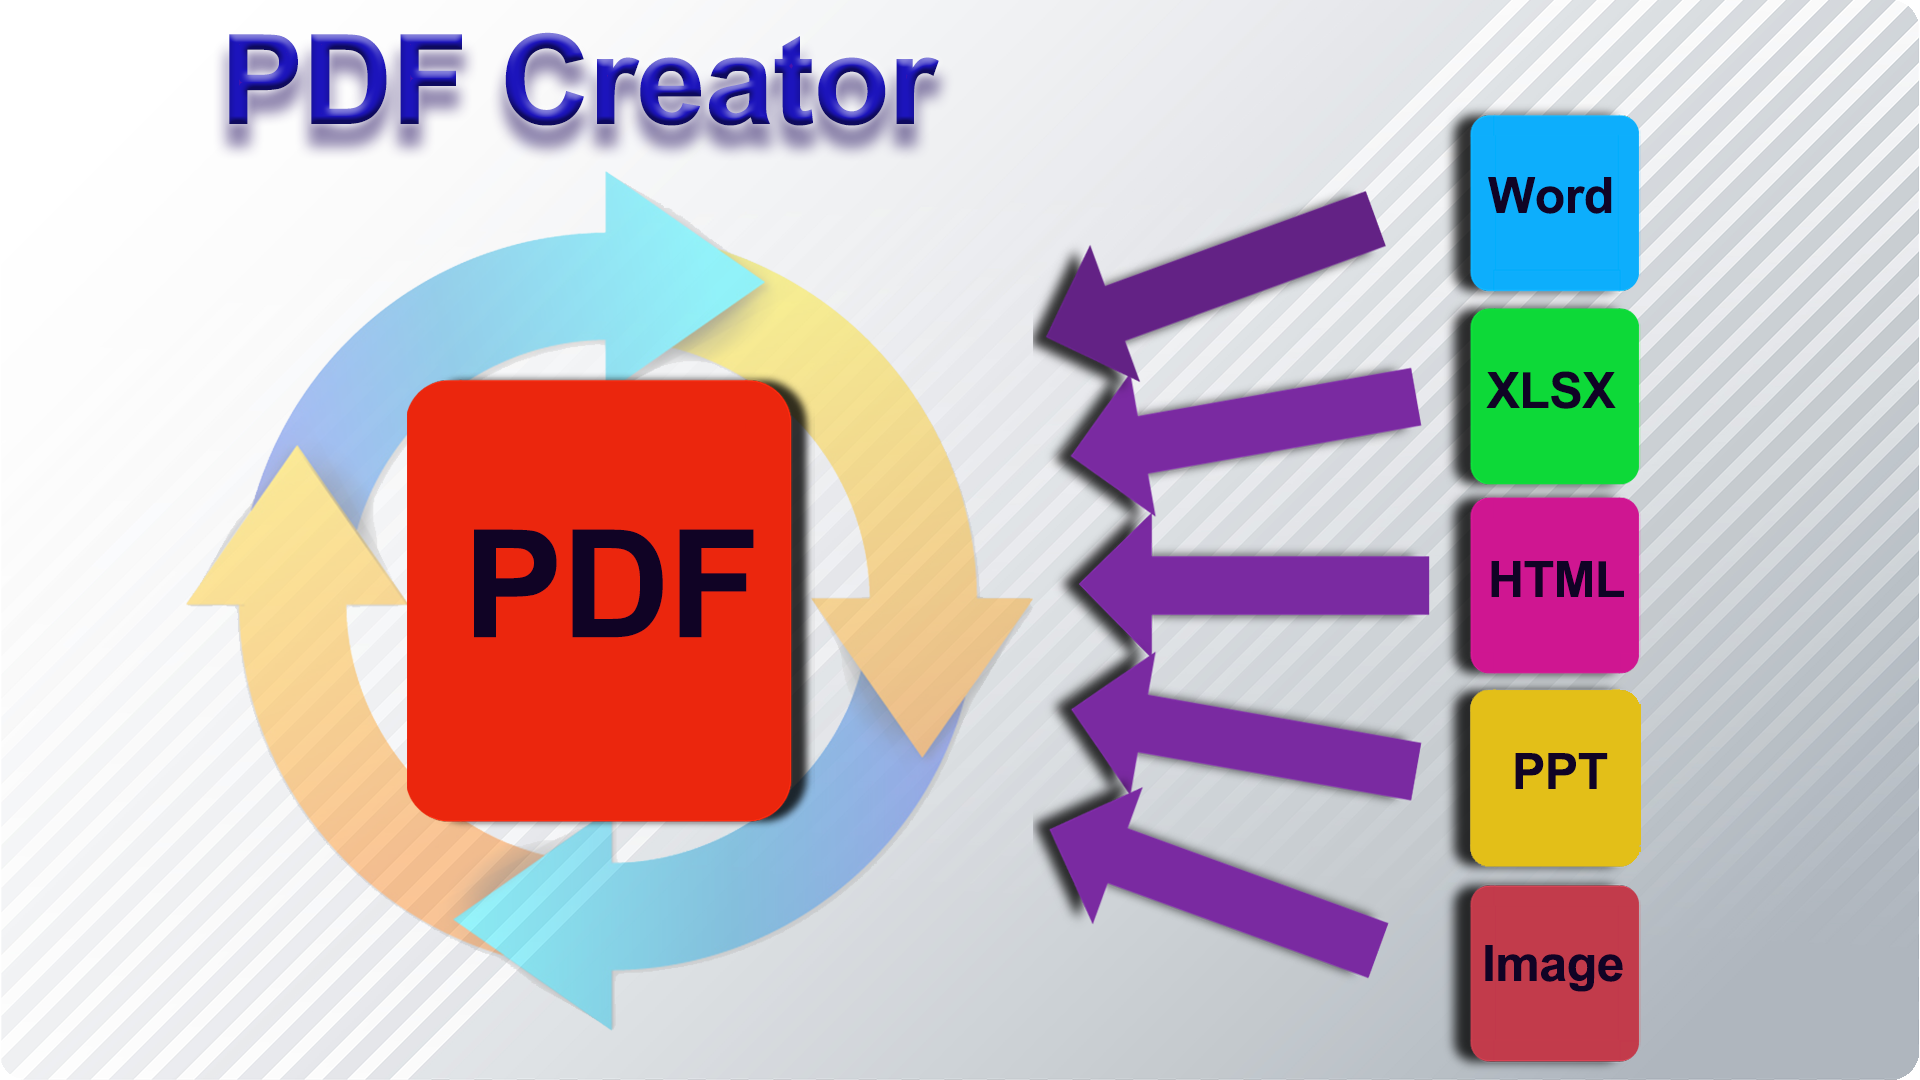 XDue PDF Converter Free